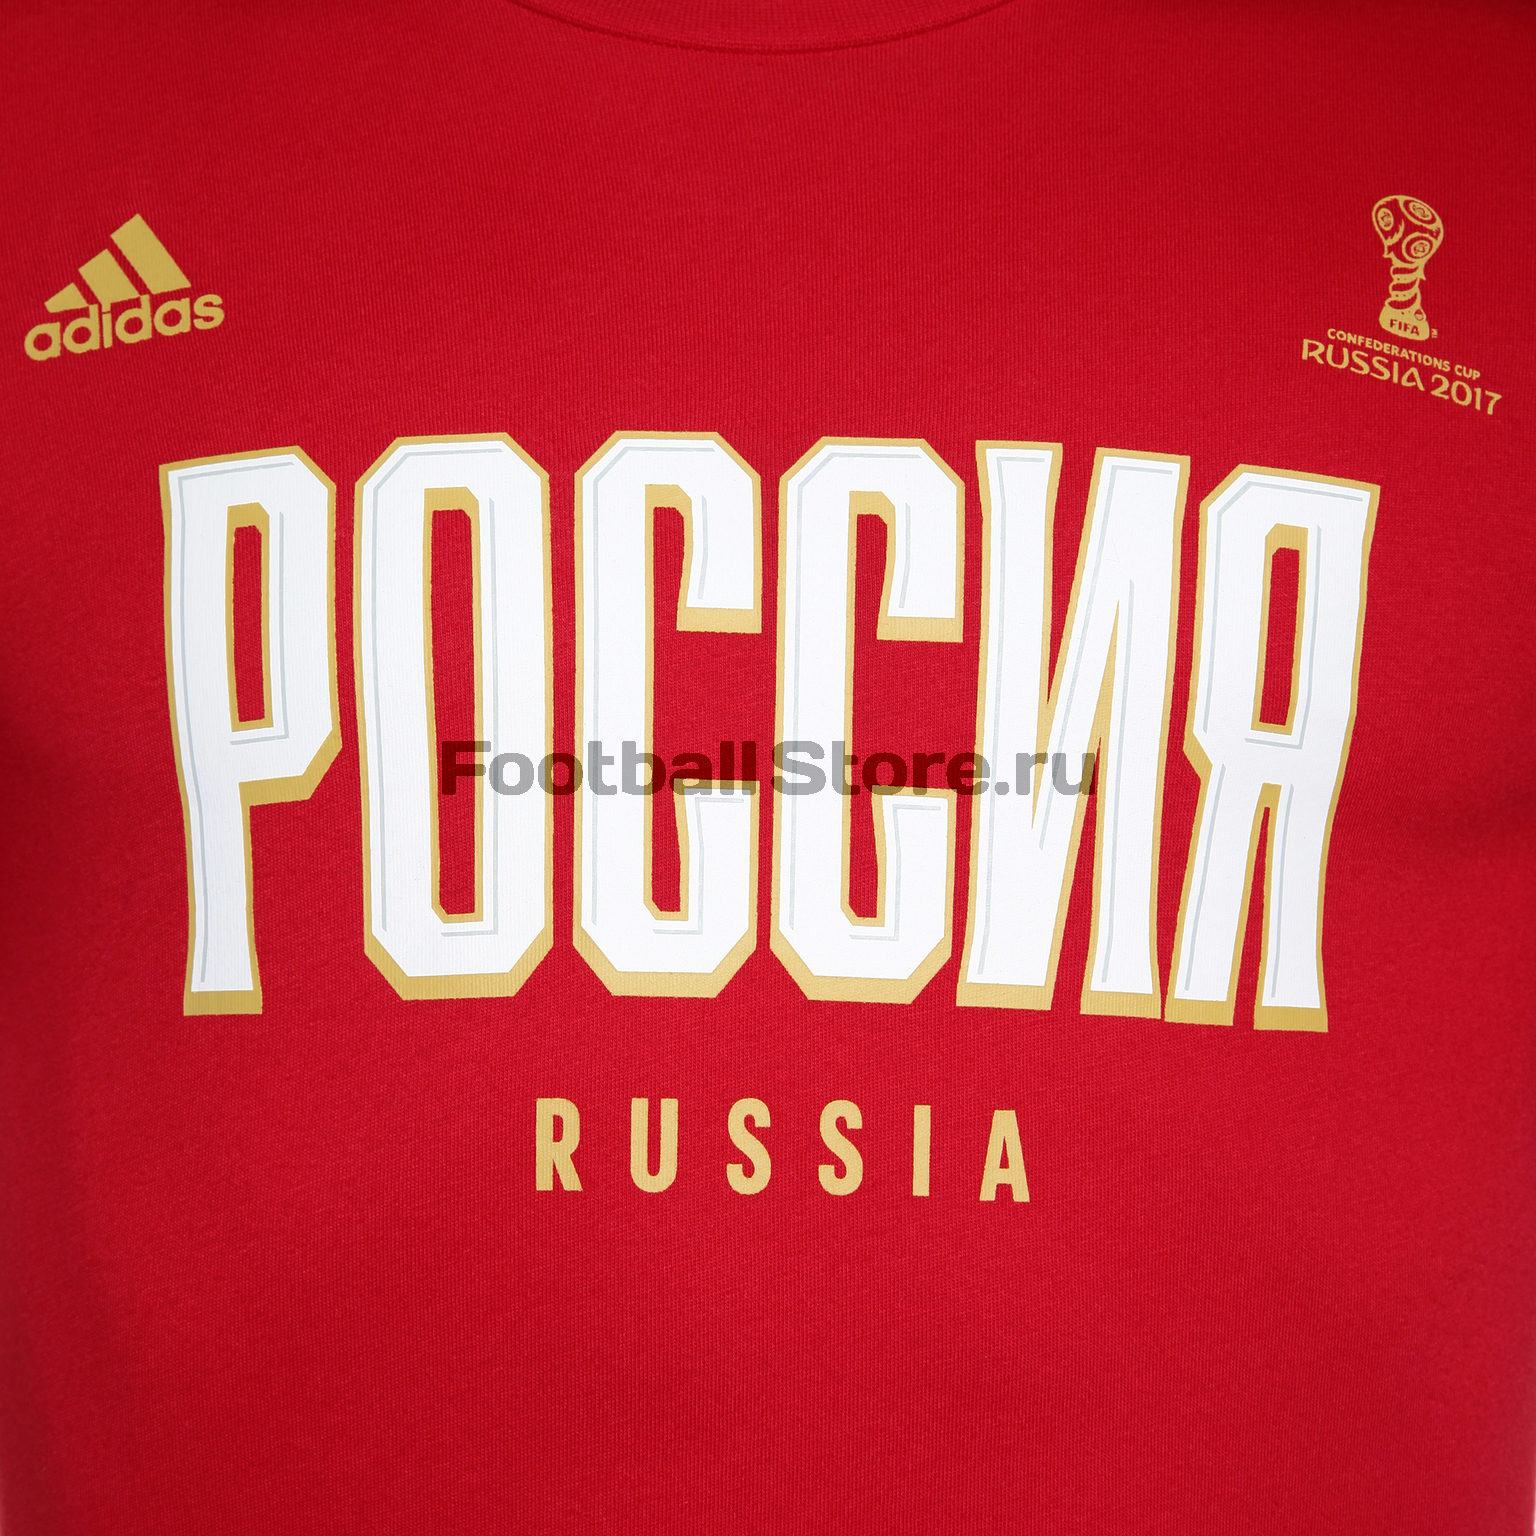 Футболка Adidas Russia BP7301 